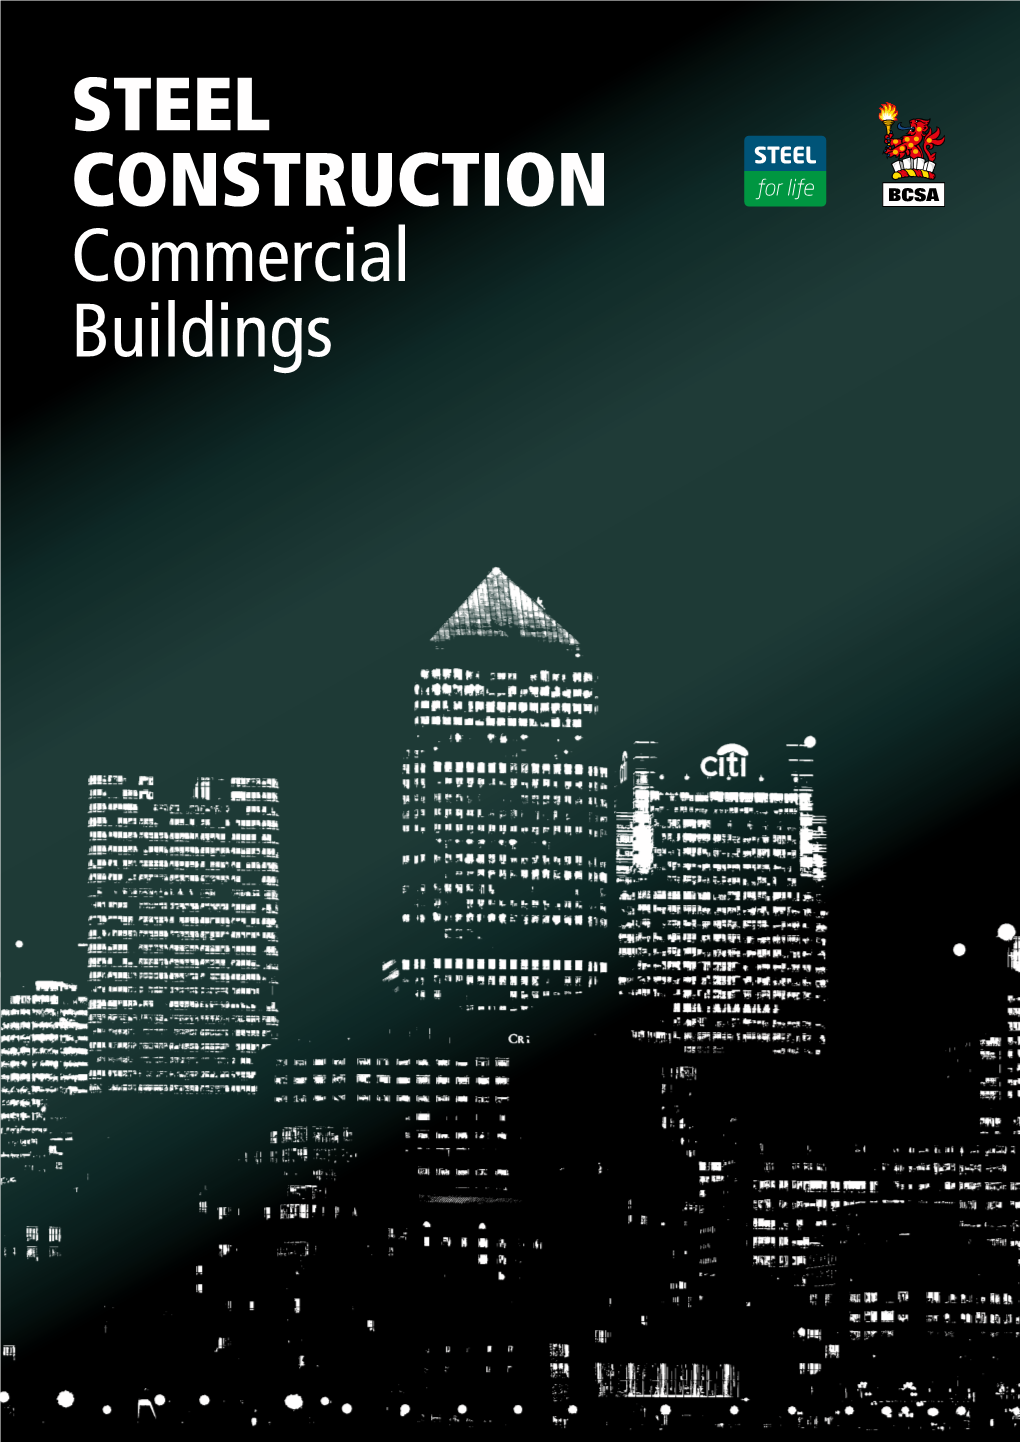 STEEL CONSTRUCTION Commercial Buildings